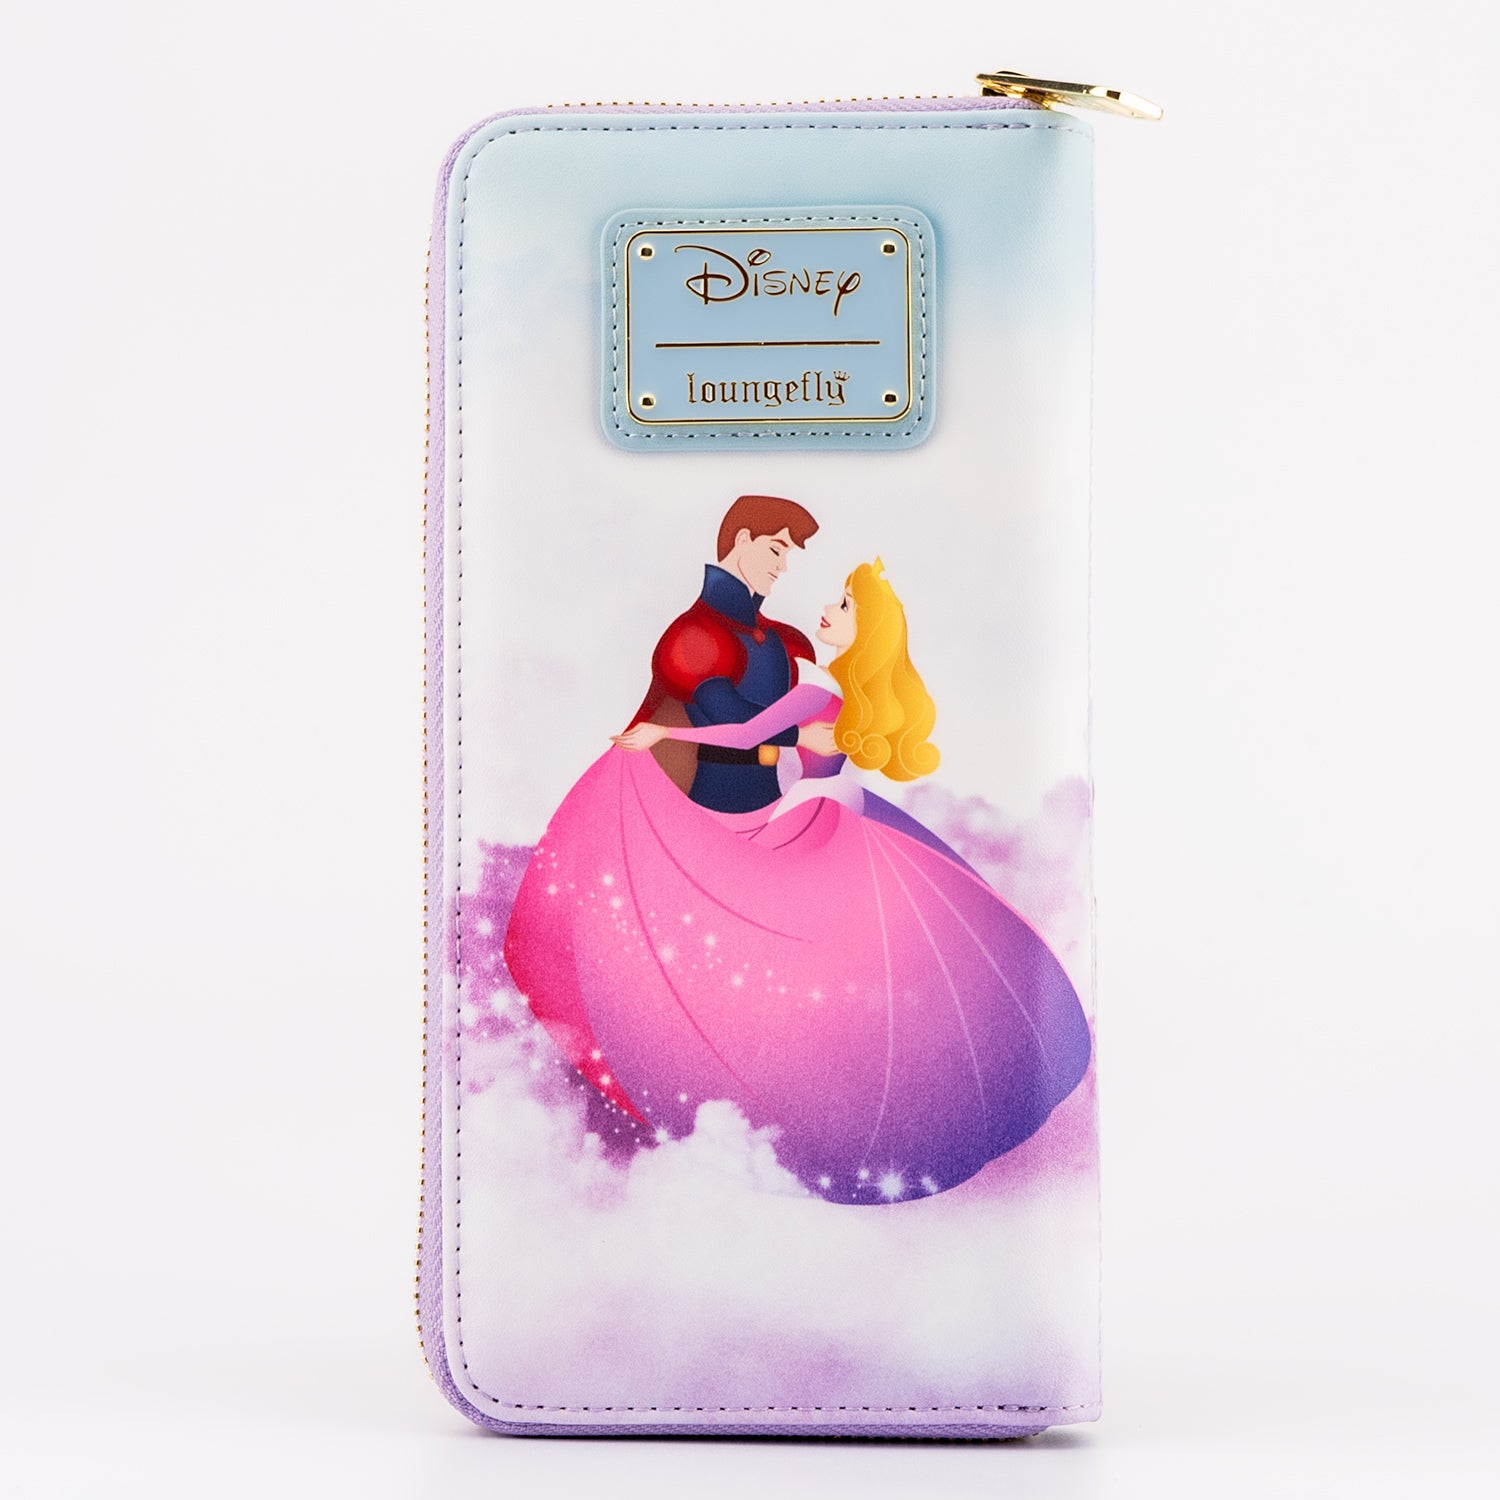 Loungefly x Disney Sleeping Beauty Aurora's Castle Sequin Mini Backpack